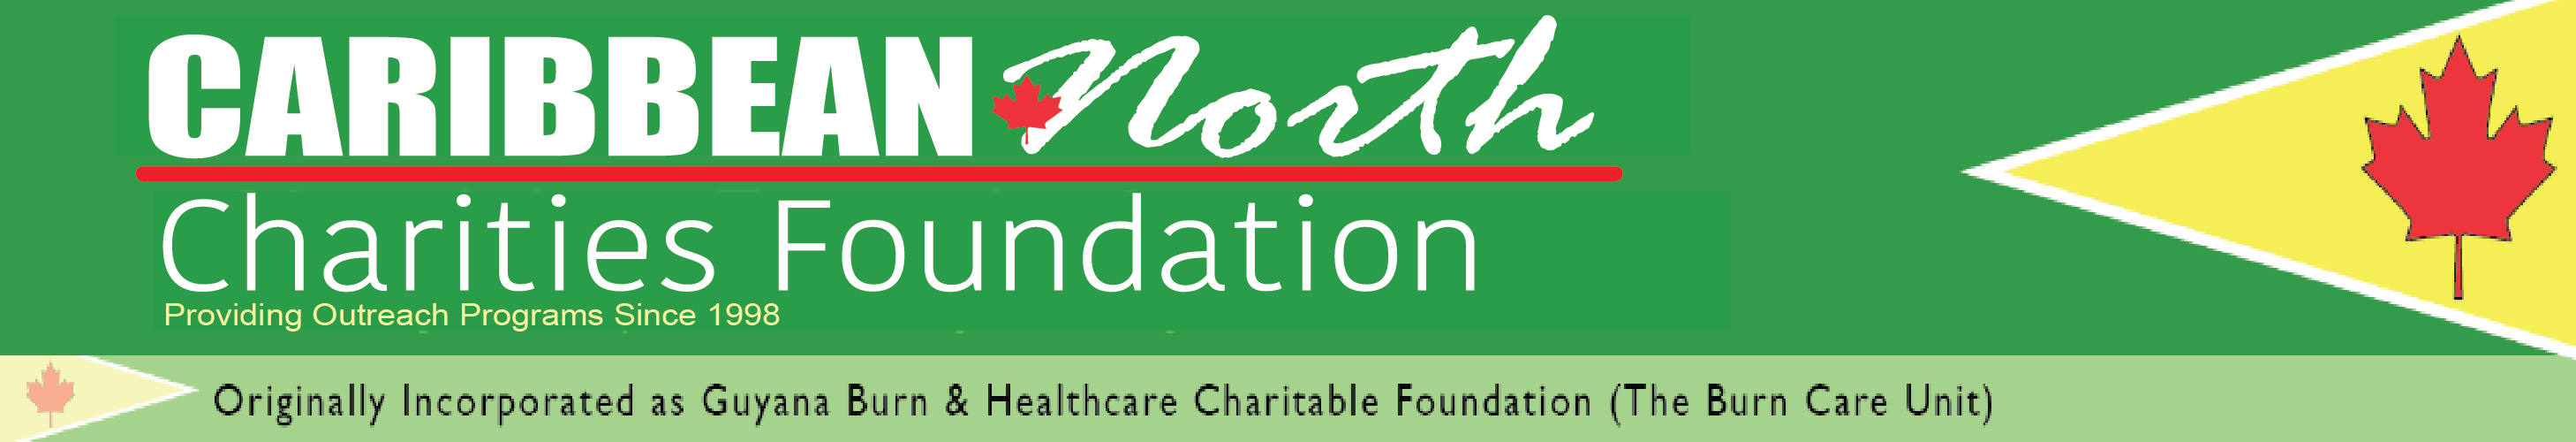 Caribbean North Charities Foundation